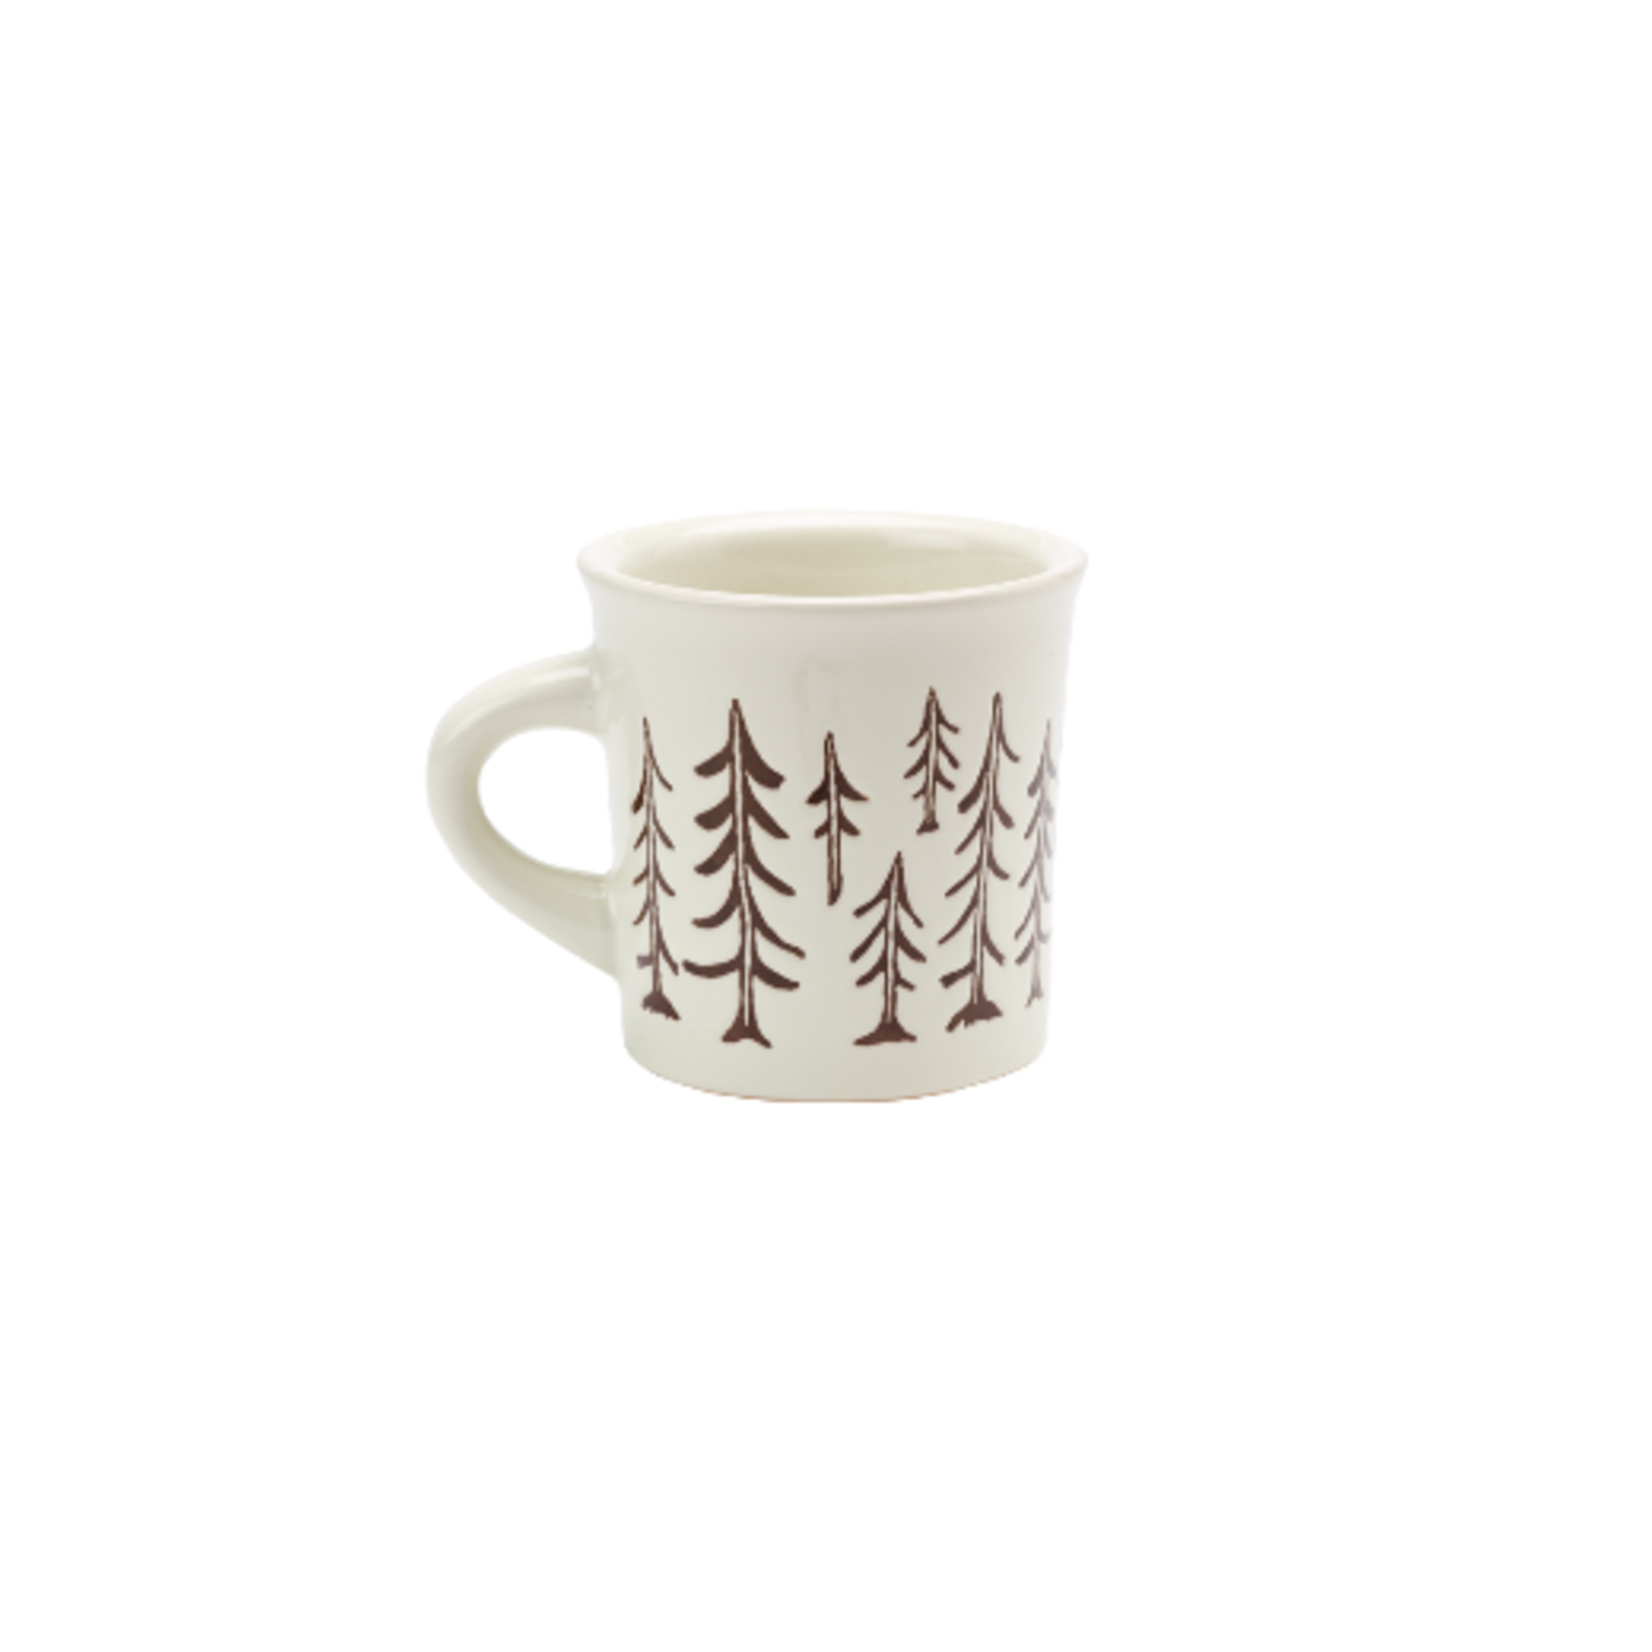 ORE Originals Cuppa This Cuppa Mug, Pine Trees